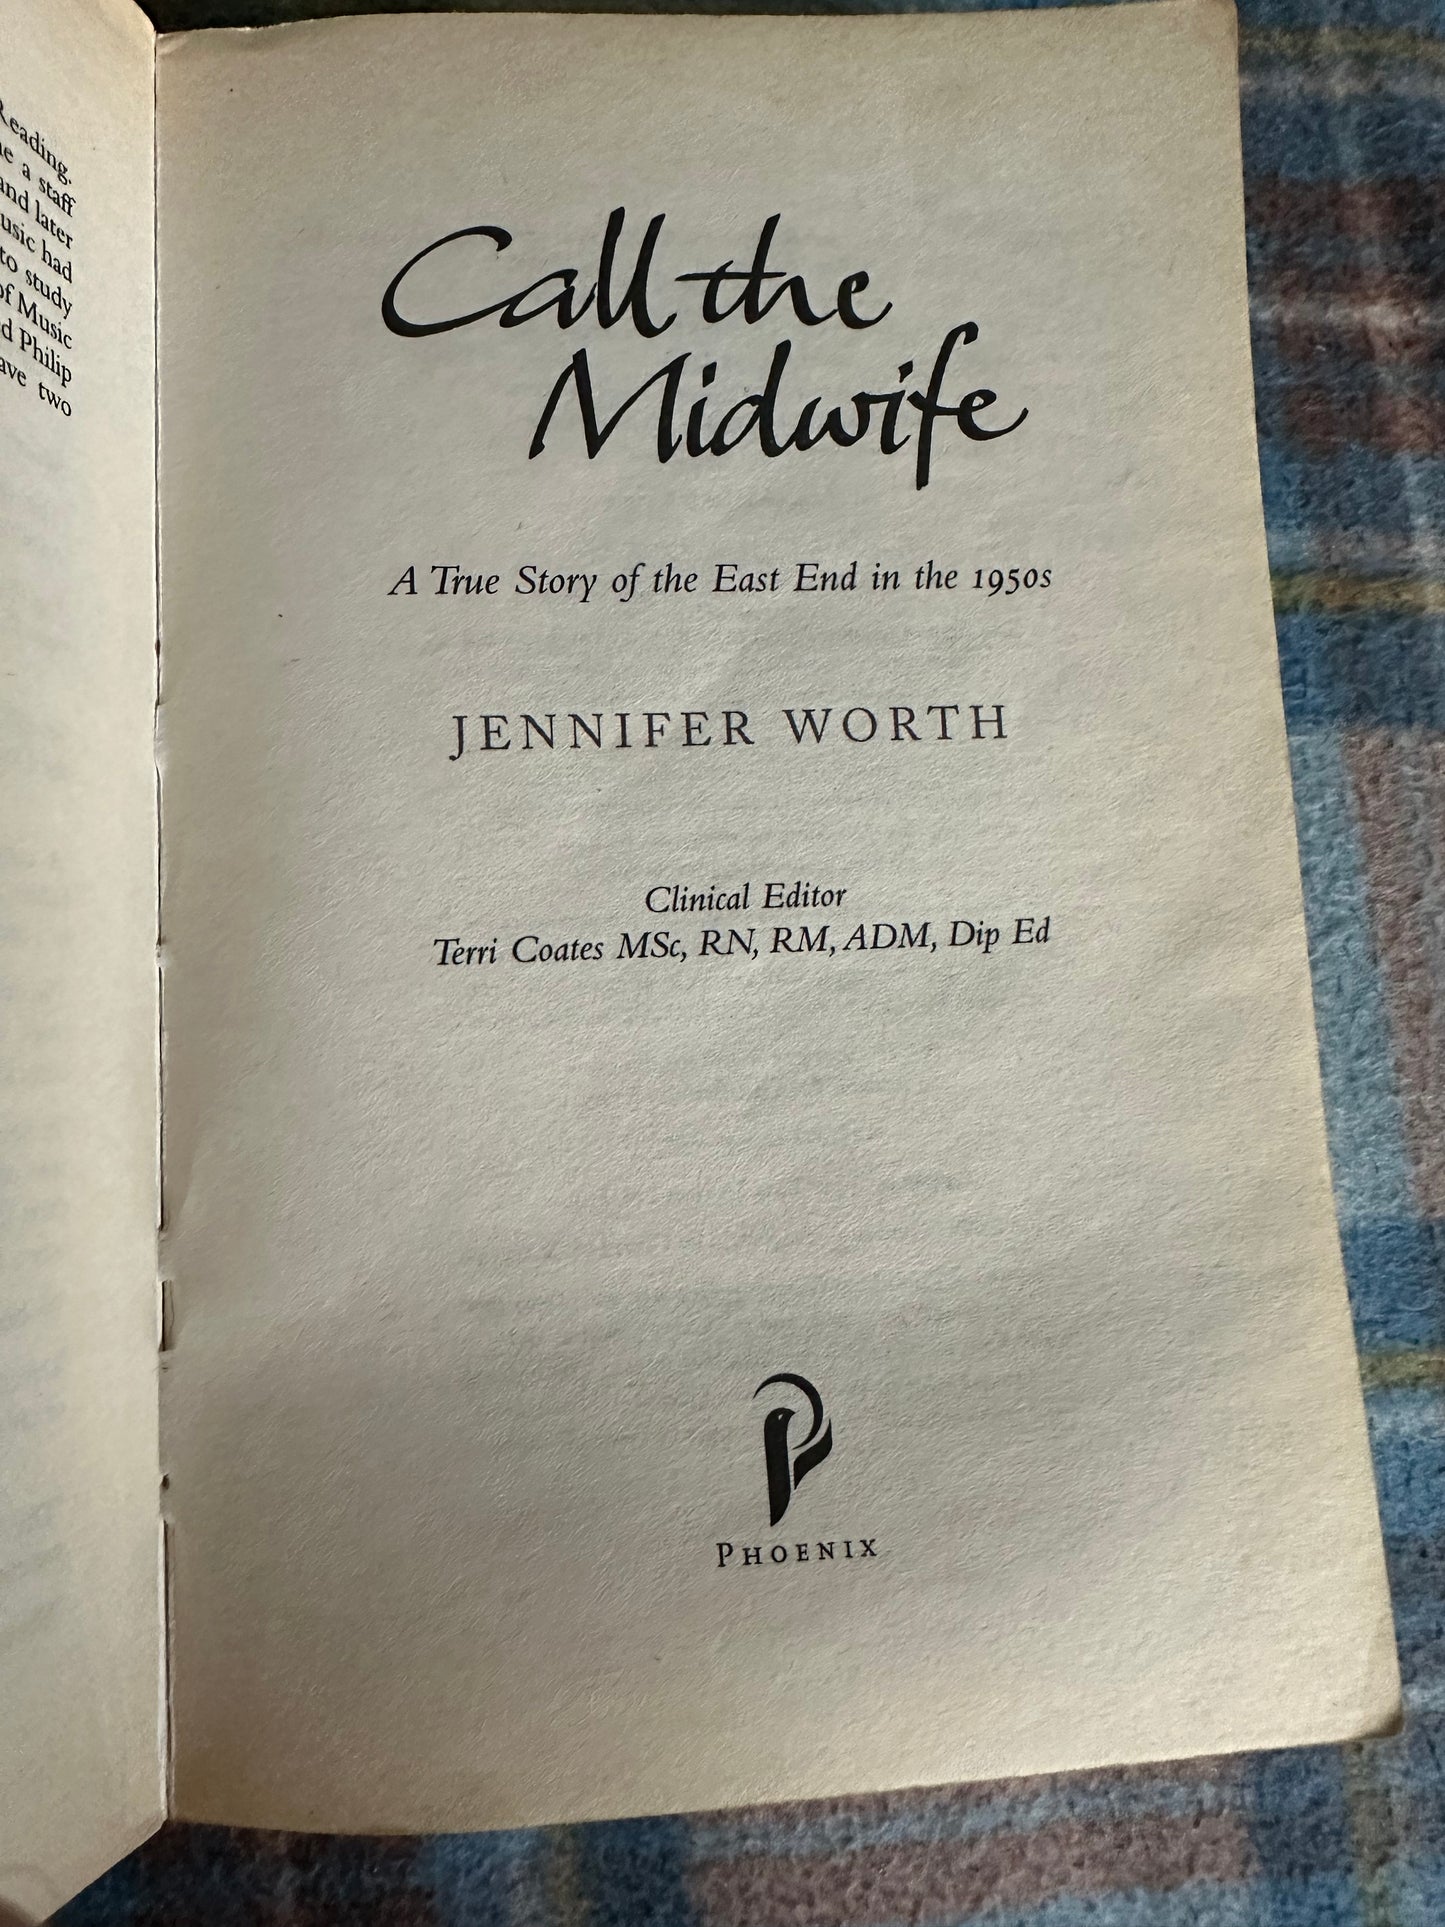 2008 Call The Midwife - Jennifer Worth (Phoenix Publisher)